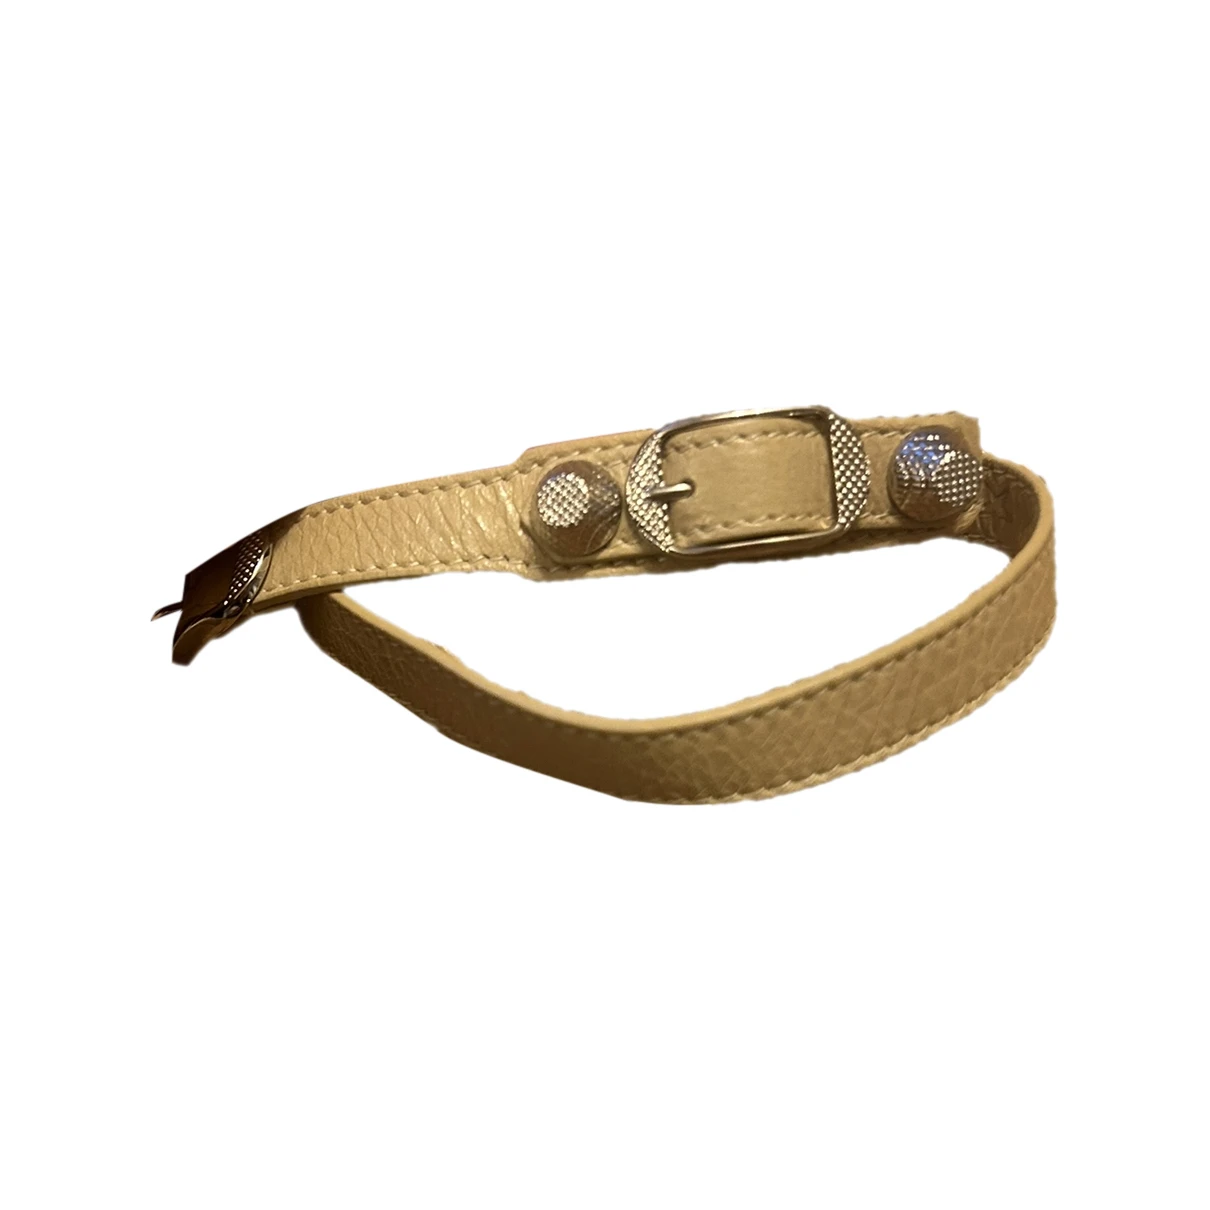 Pre-owned Balenciaga Leather Bracelet In Beige